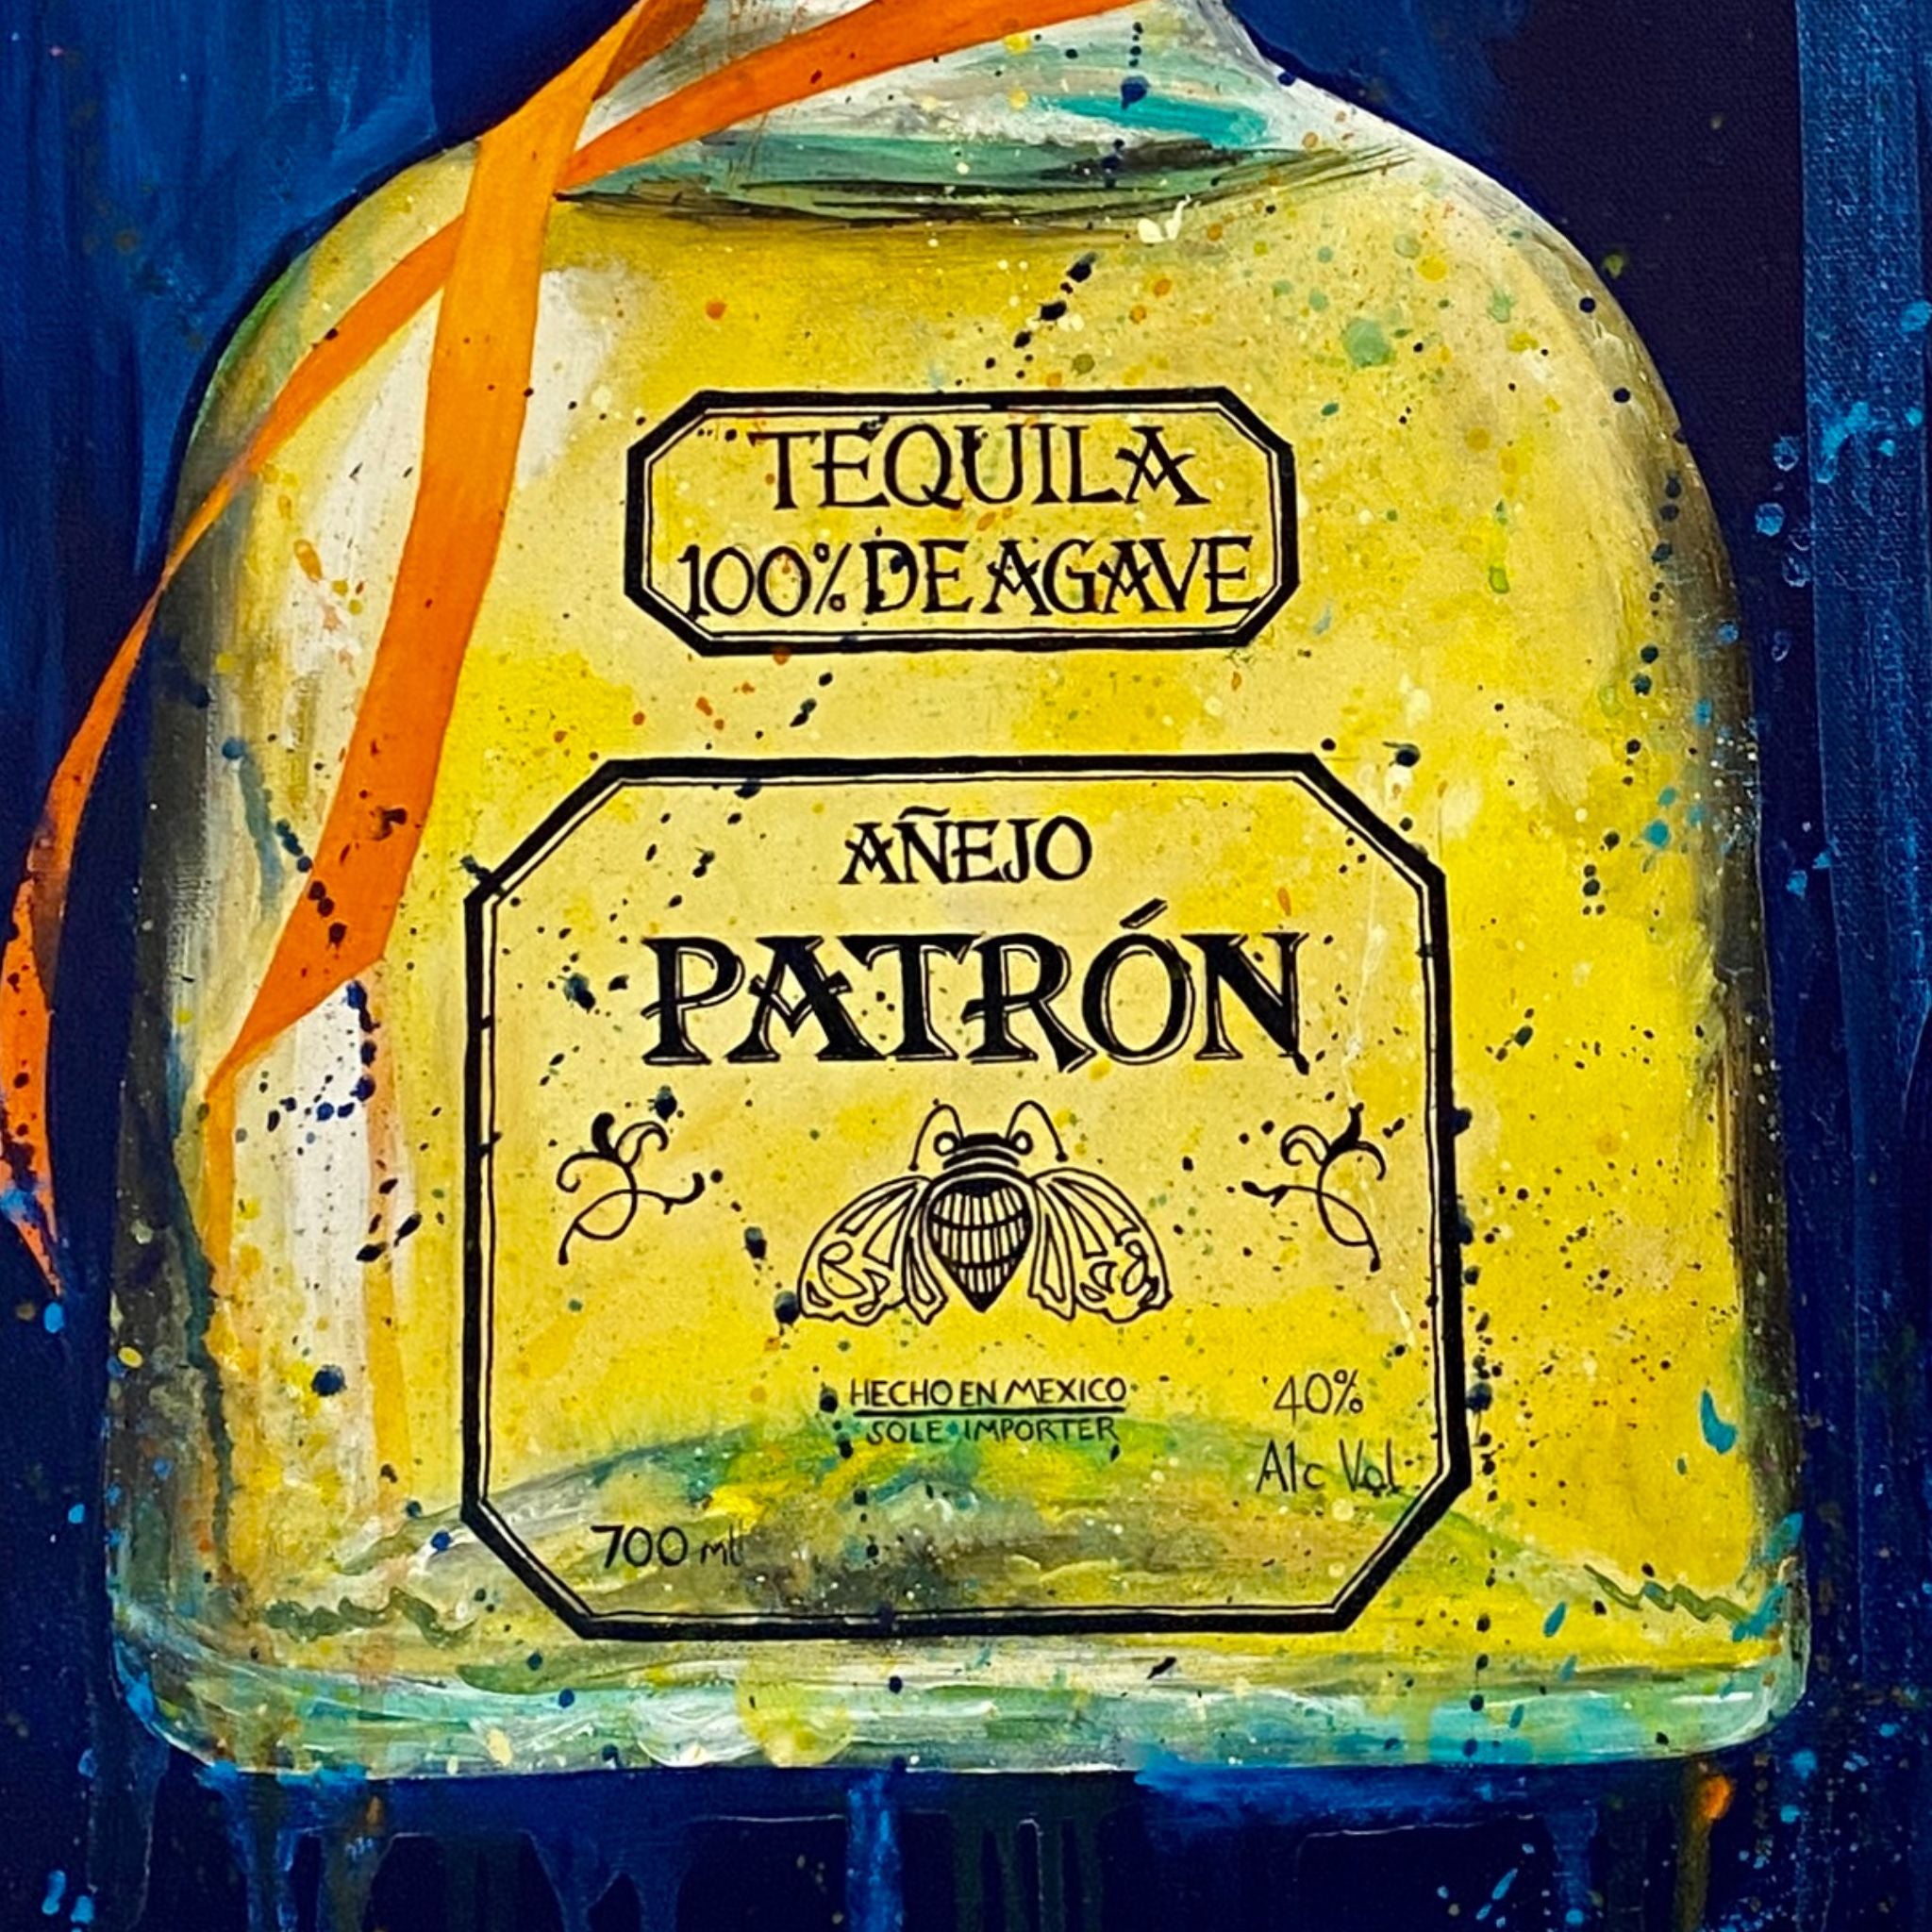 Tequila Bottle Art - Acrylic on Canvas